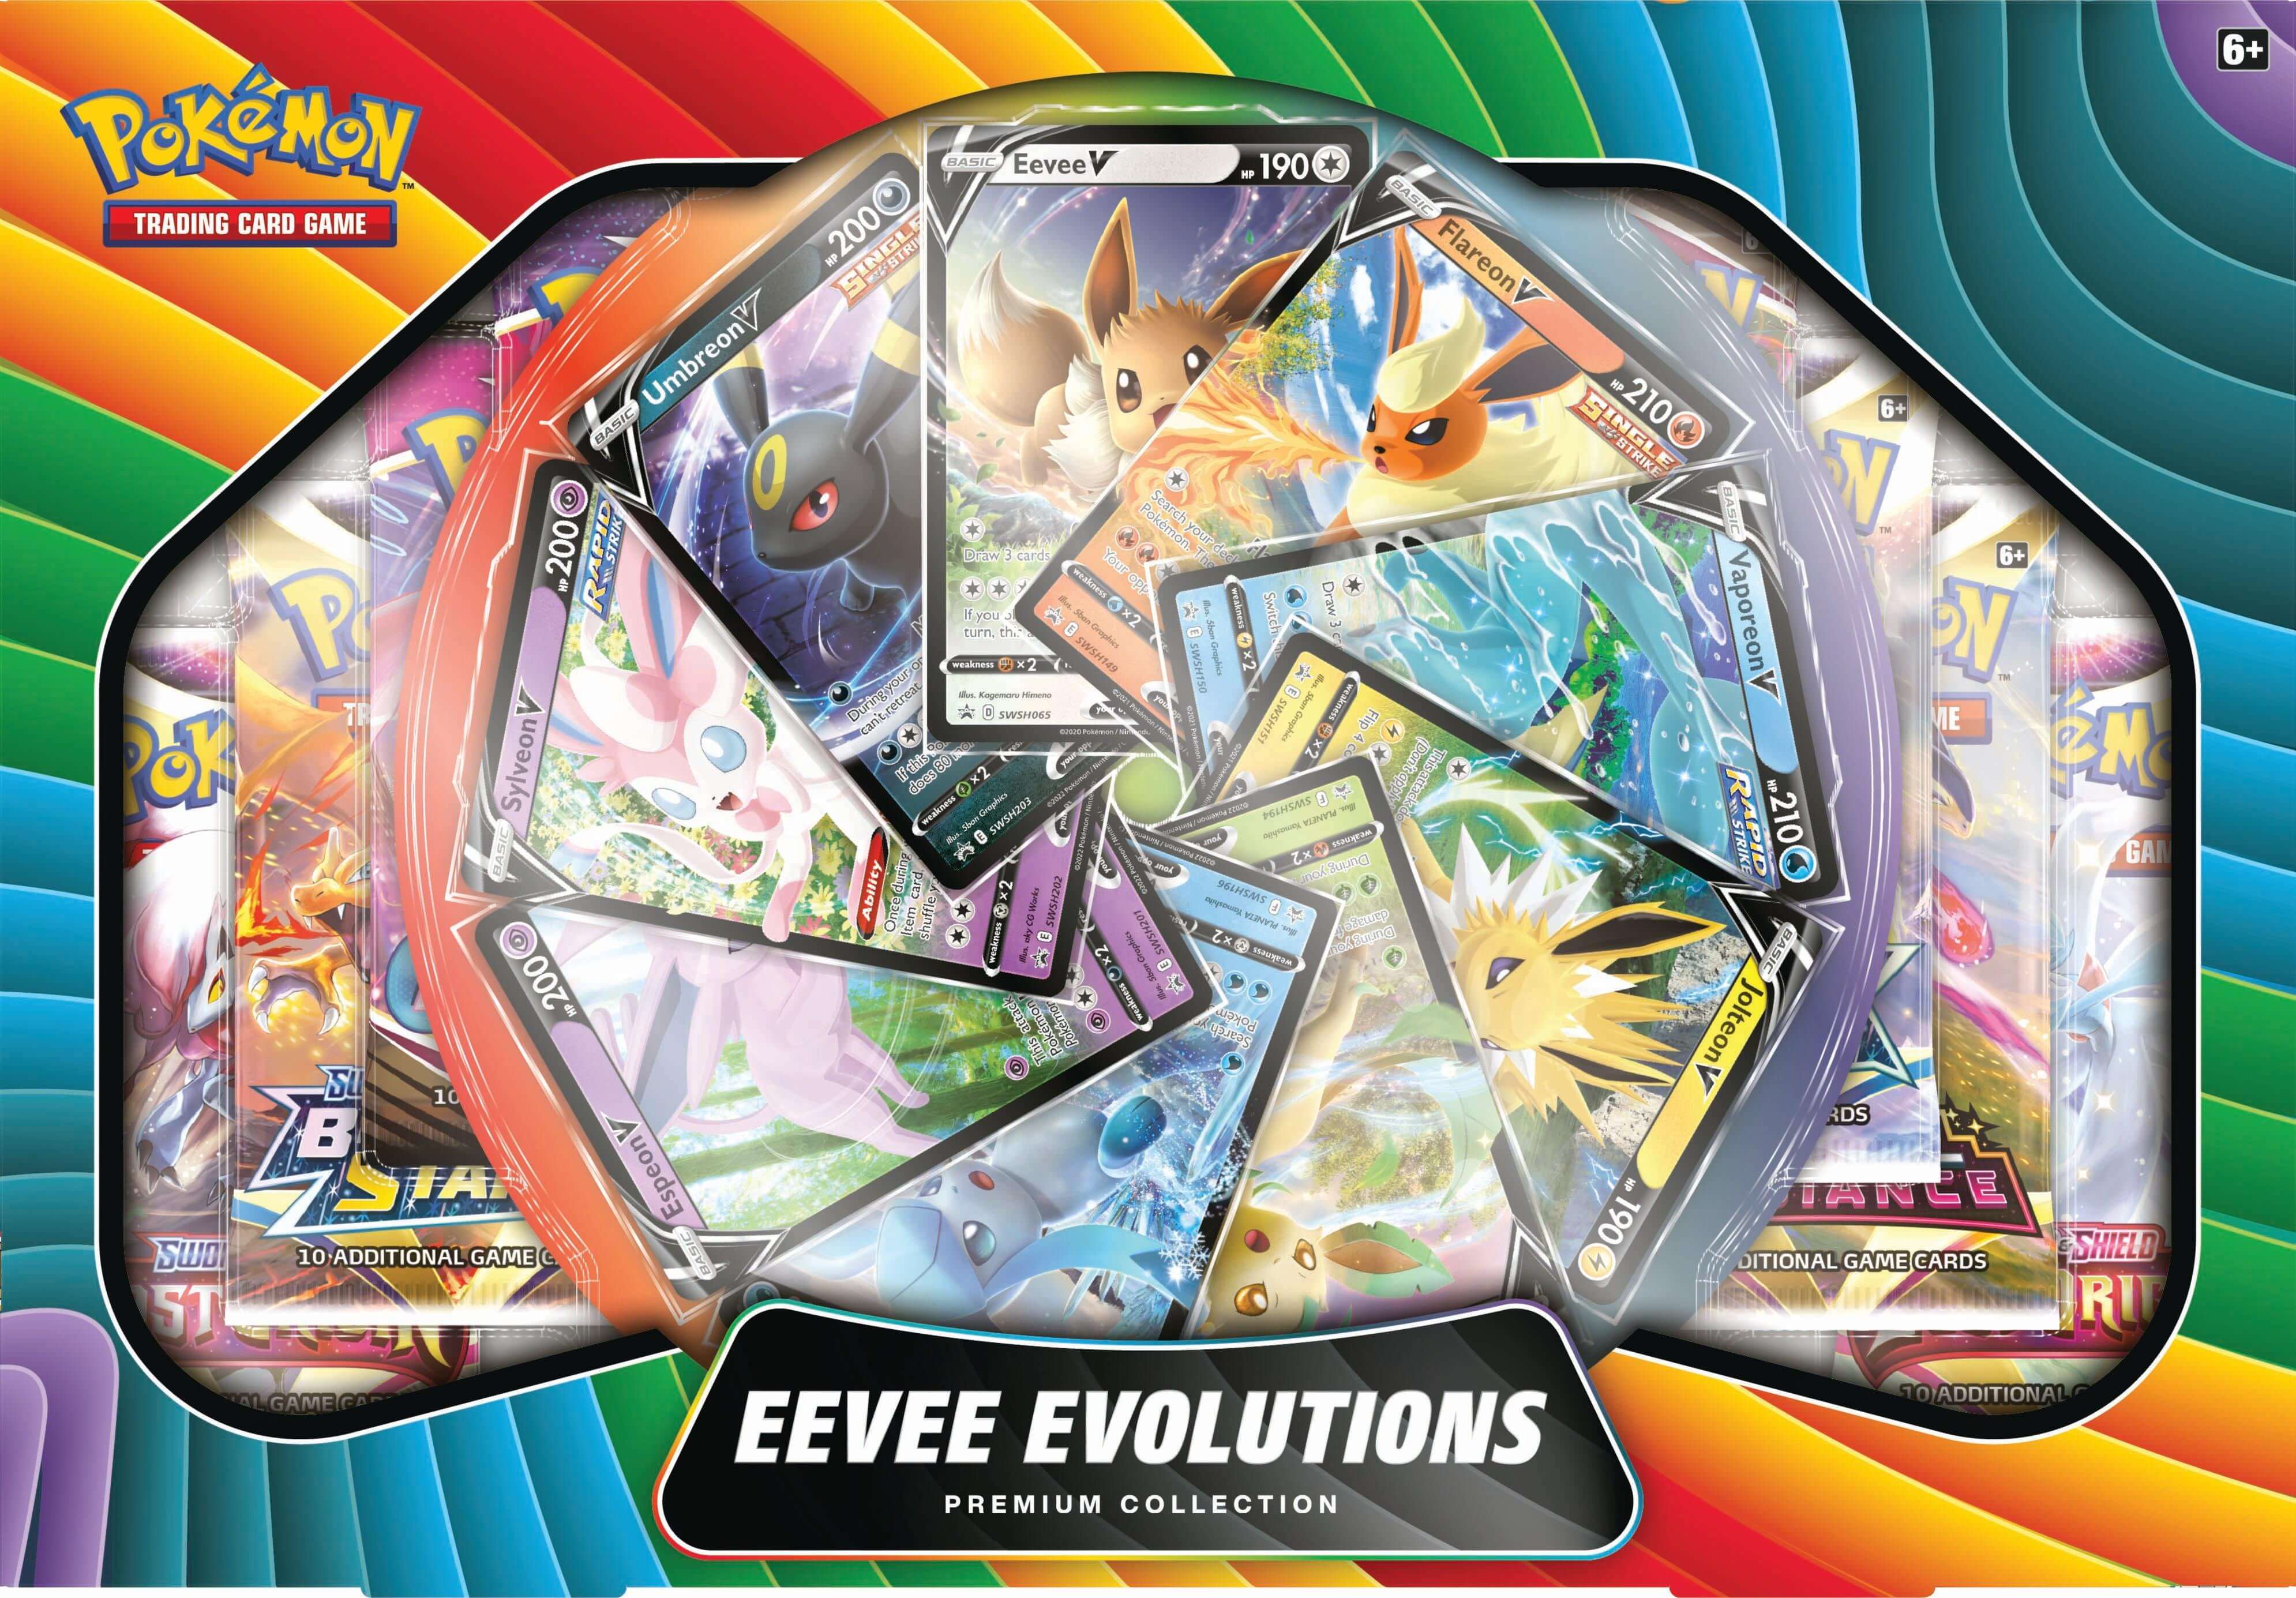 Eevee Evolutions Premium Collection Open Up for Pre-Order!